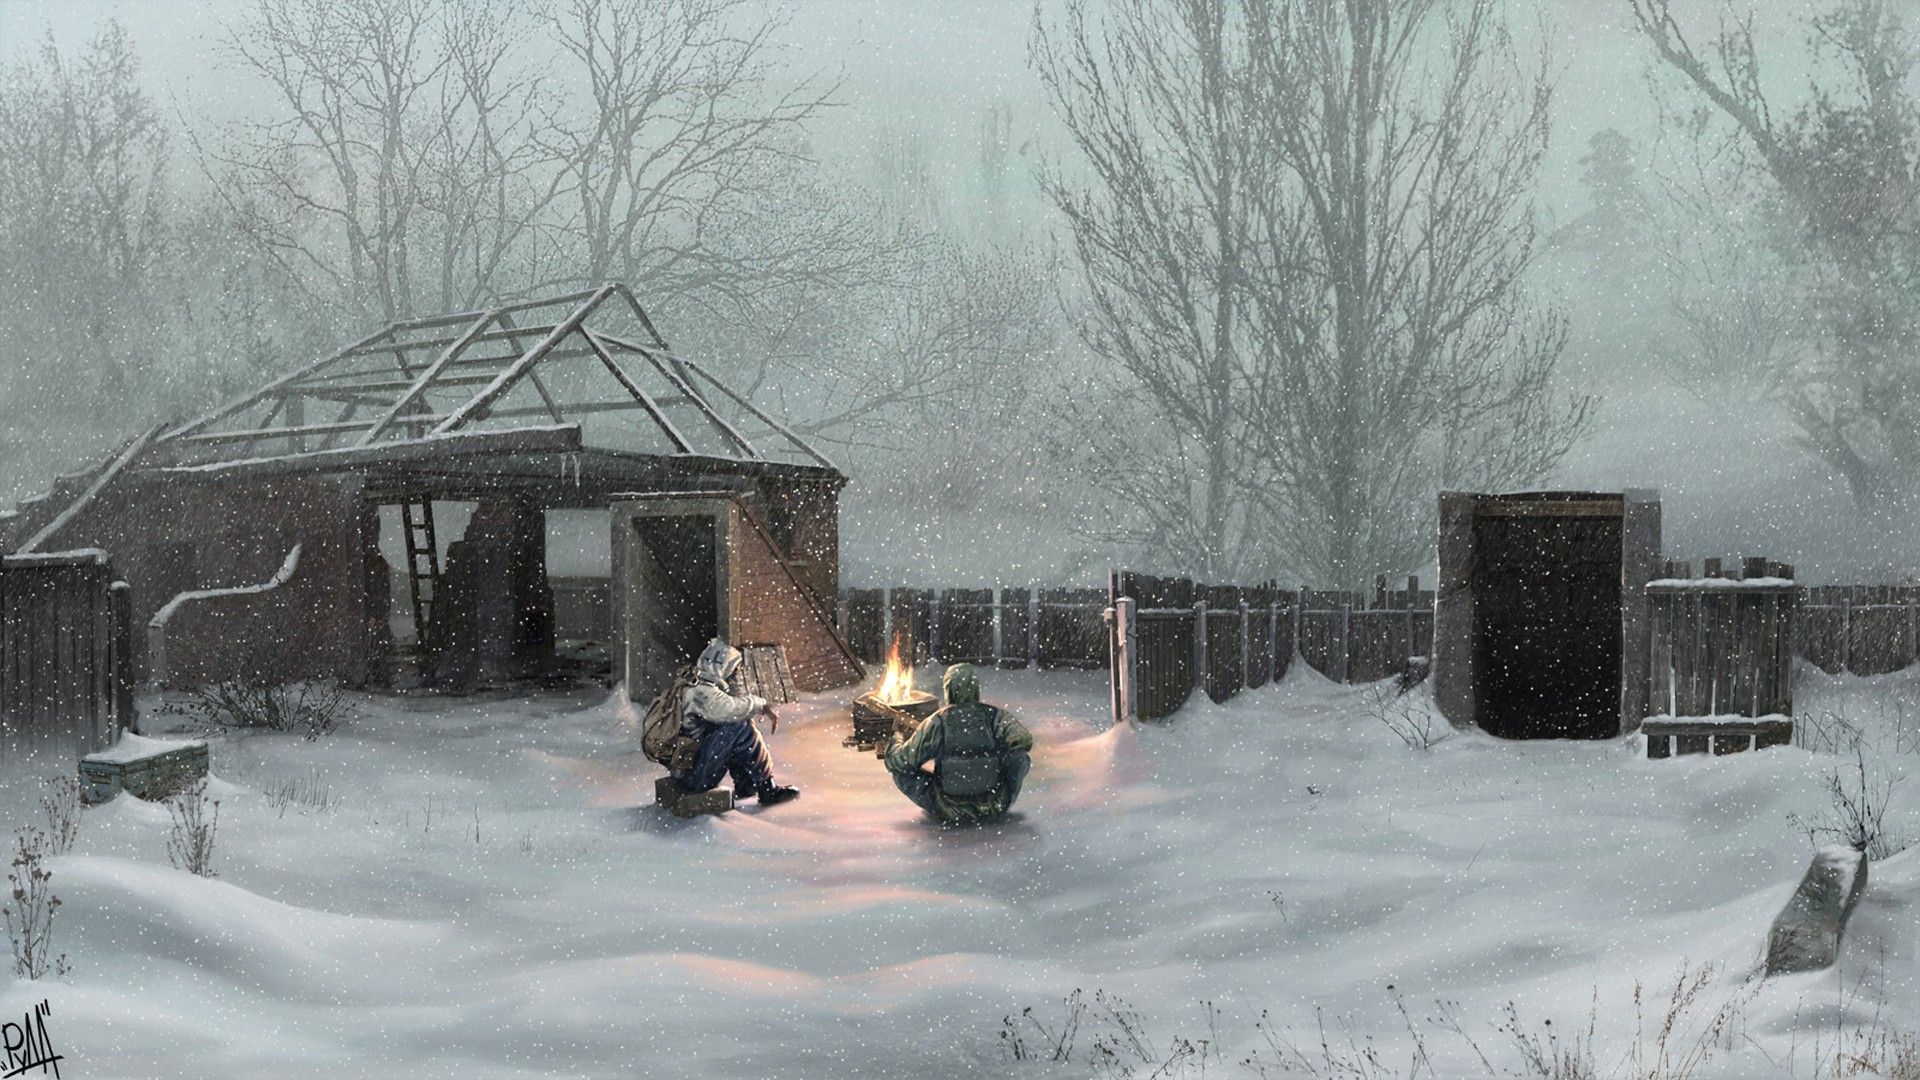 Video games winter snow S_T_A_L_K_E_R_ fences houses Pripyat Chernobyl artwork villages wallpaperx1080